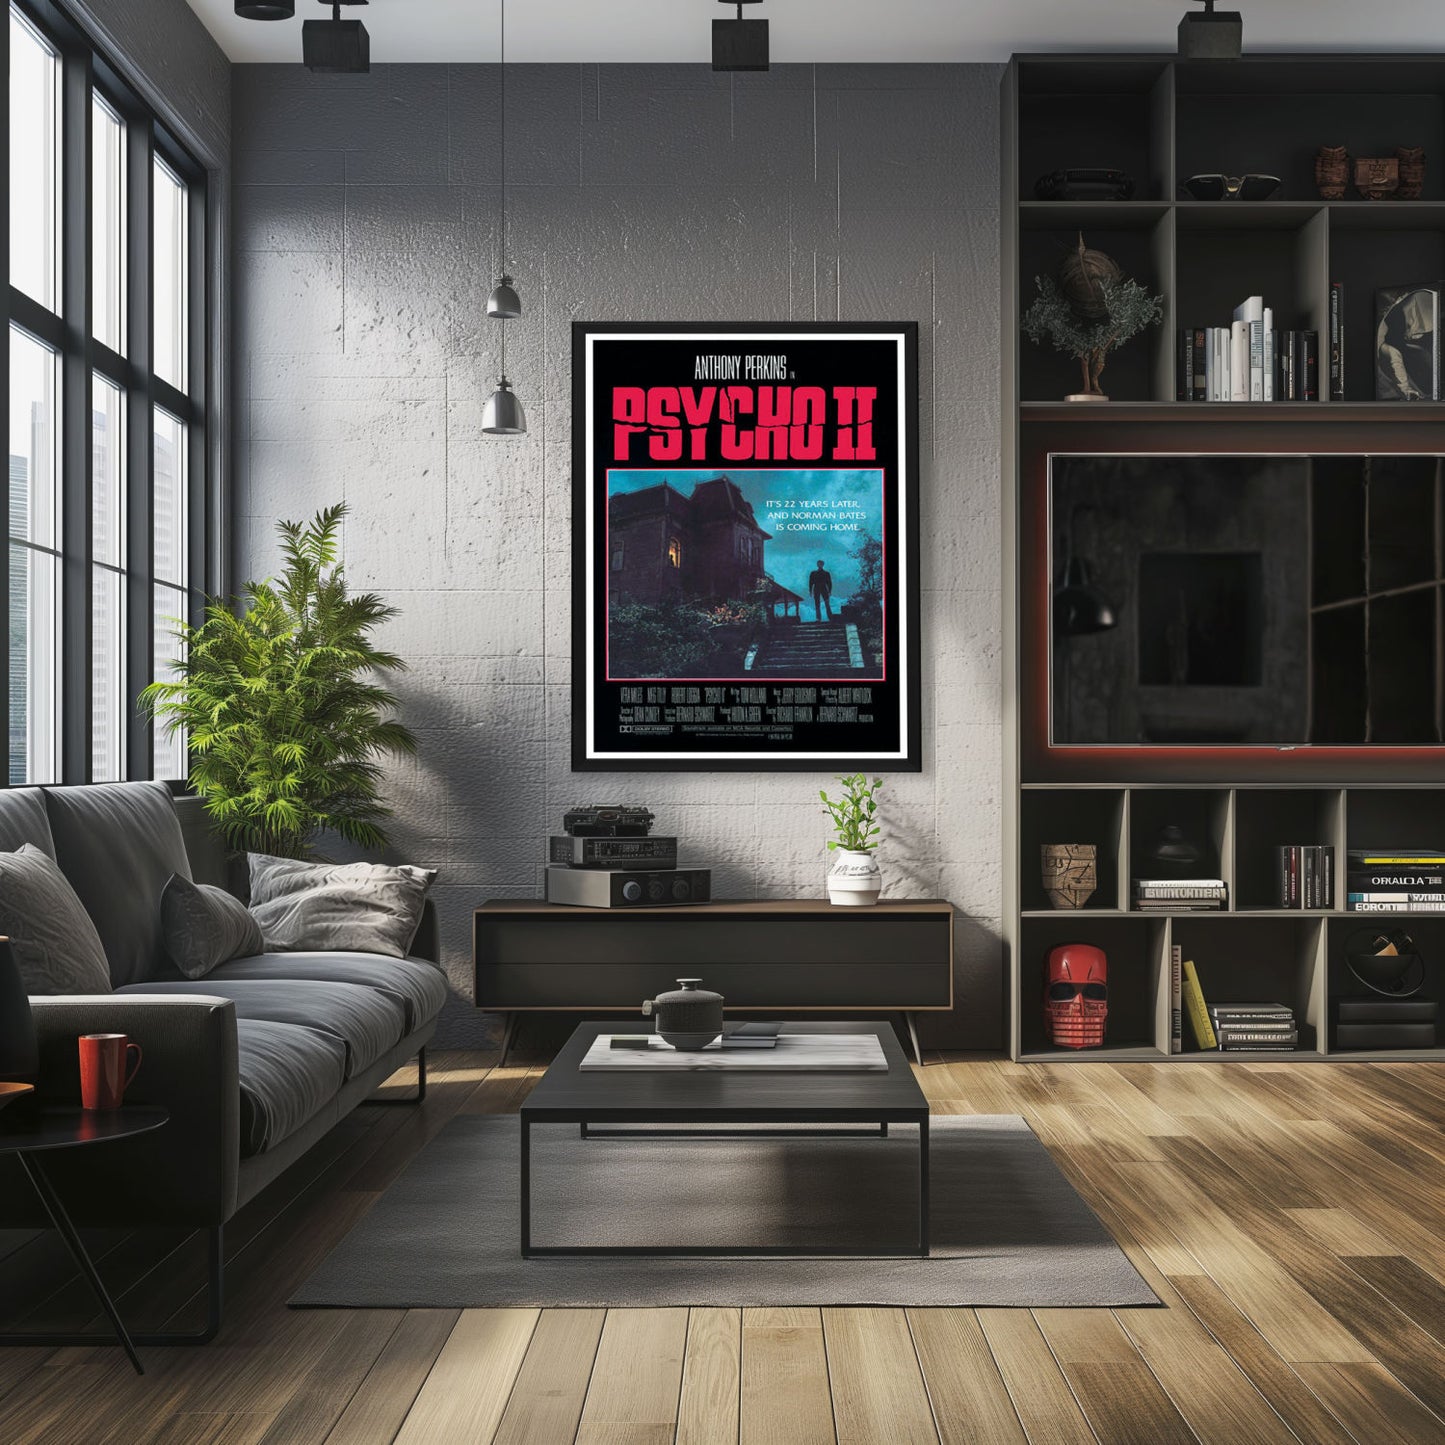 "Psycho II" (1983) Framed Movie Poster